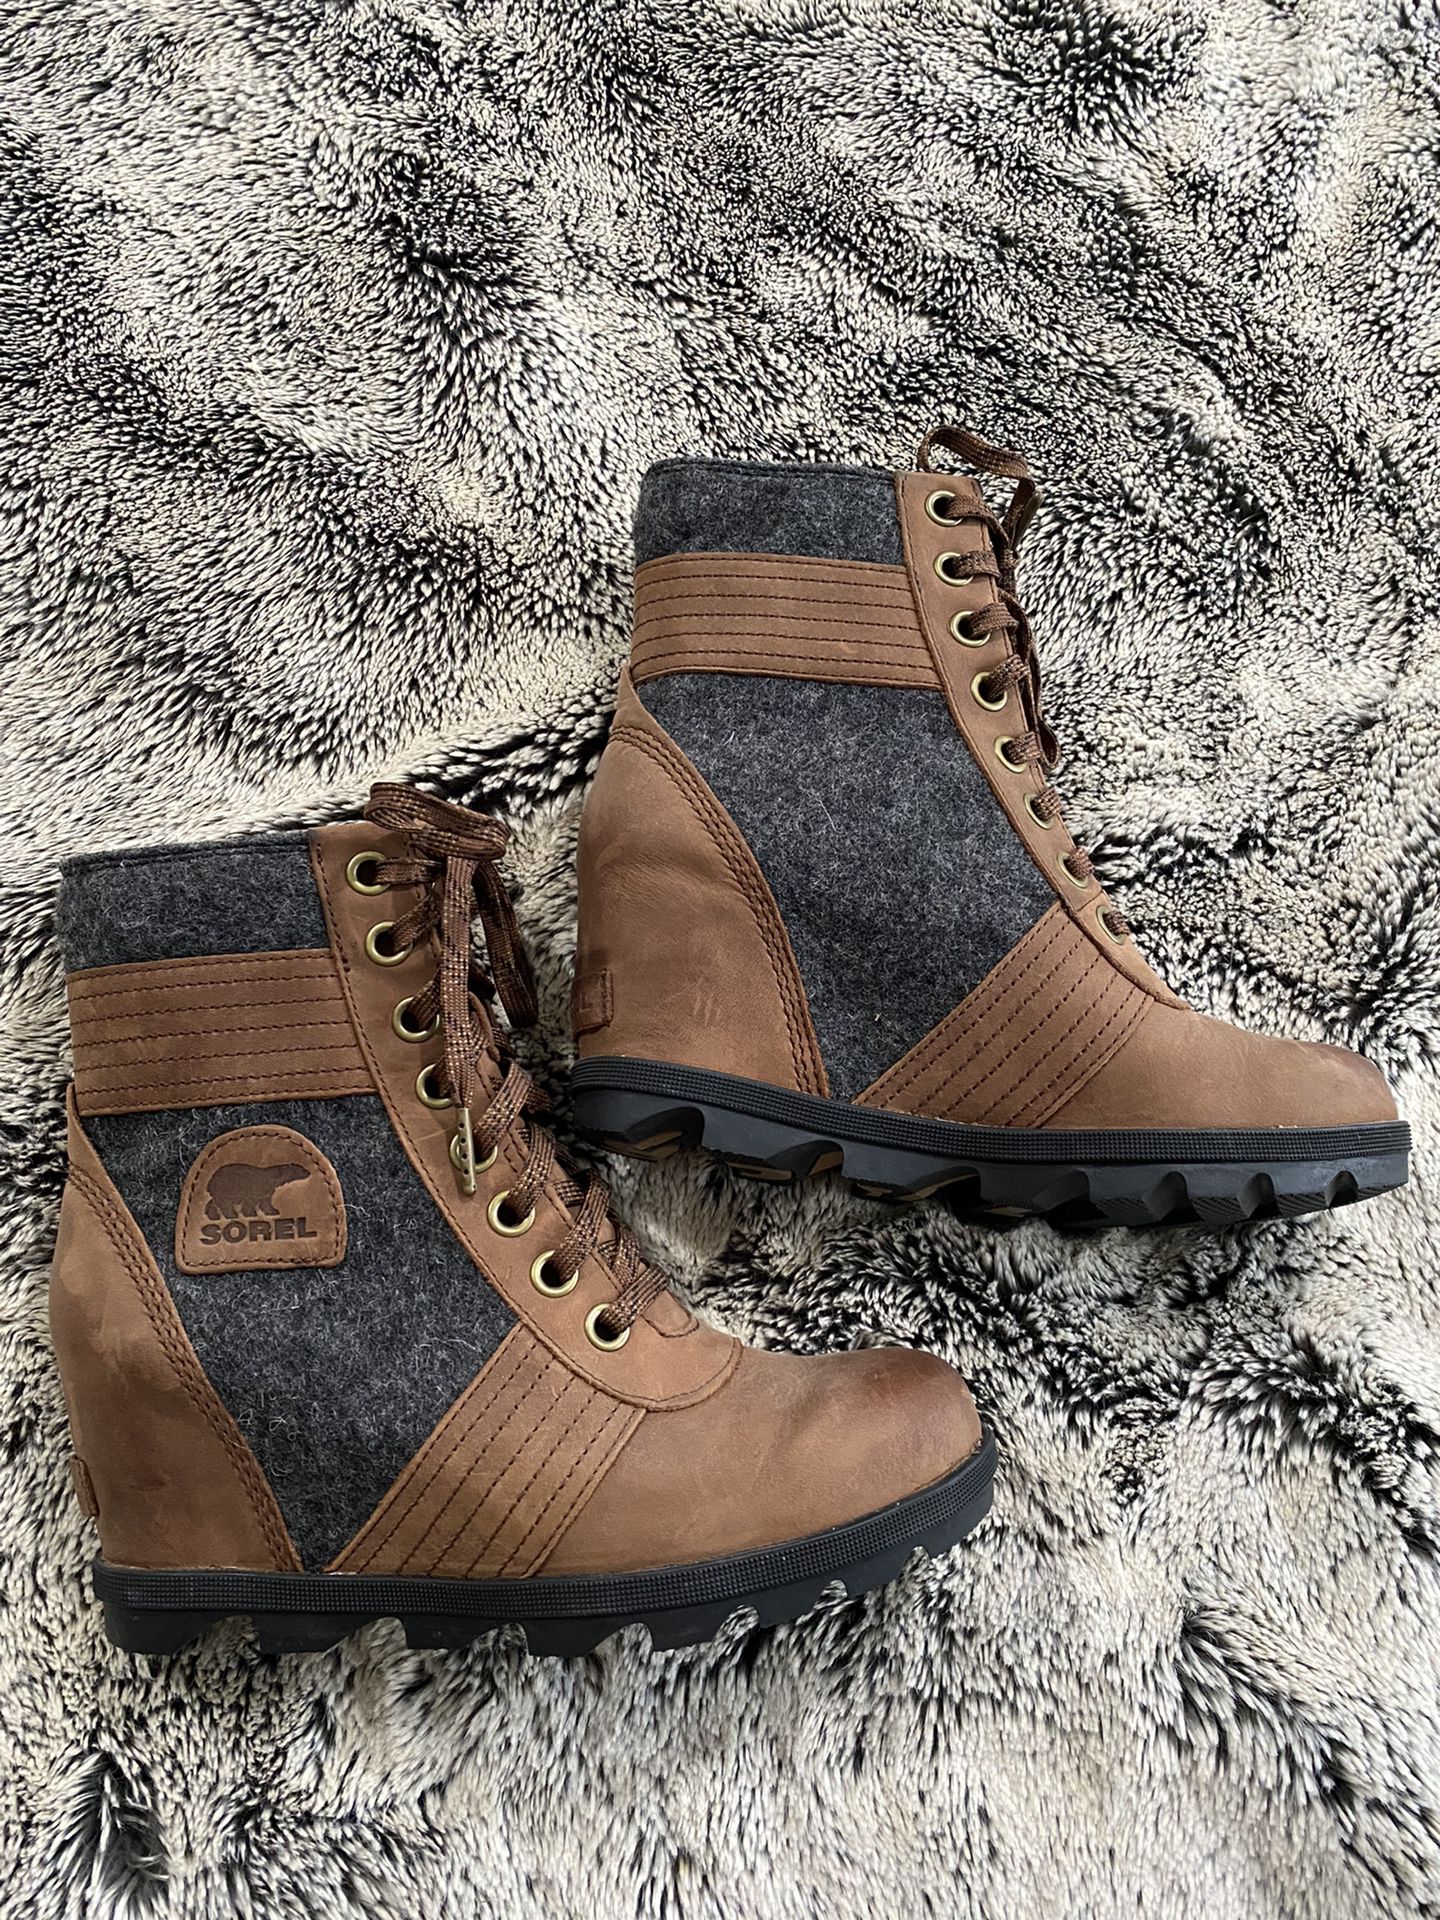 SOREL Lexie Wedge Boots Women's Sz 8.5 Waterproof Brown Leather Brand New